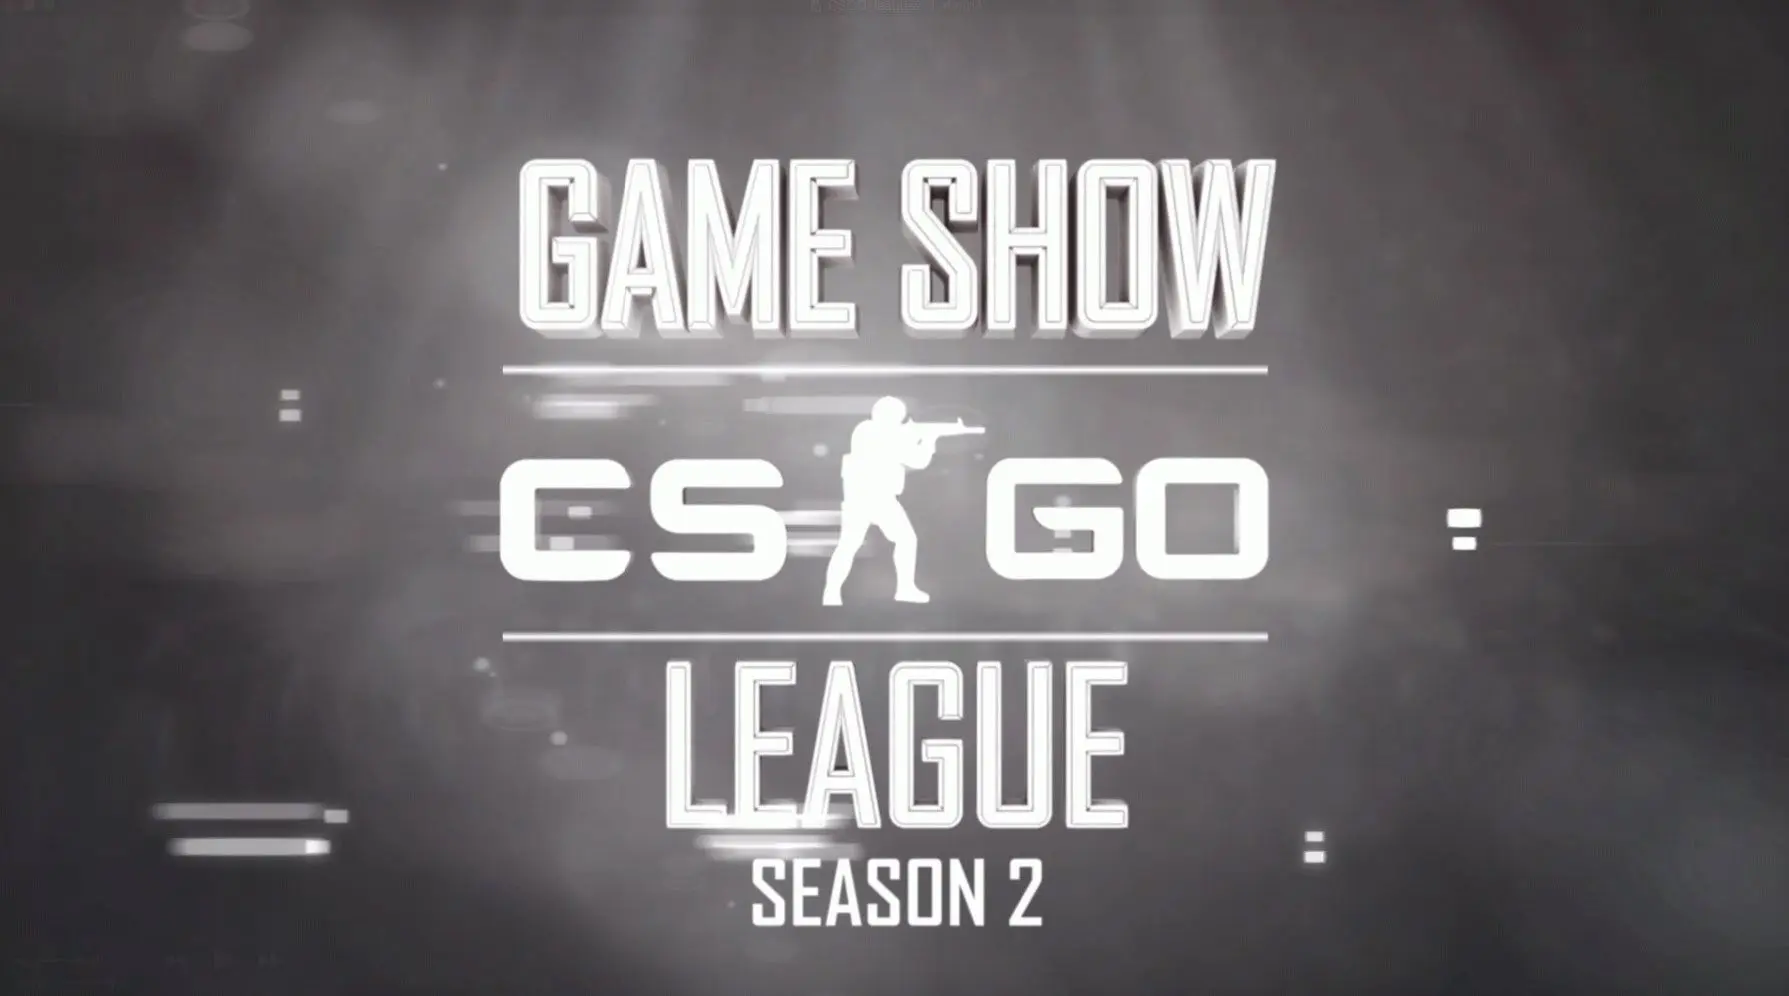 Team SoloMid - чемпионы Game Show CS:GO League Season 2